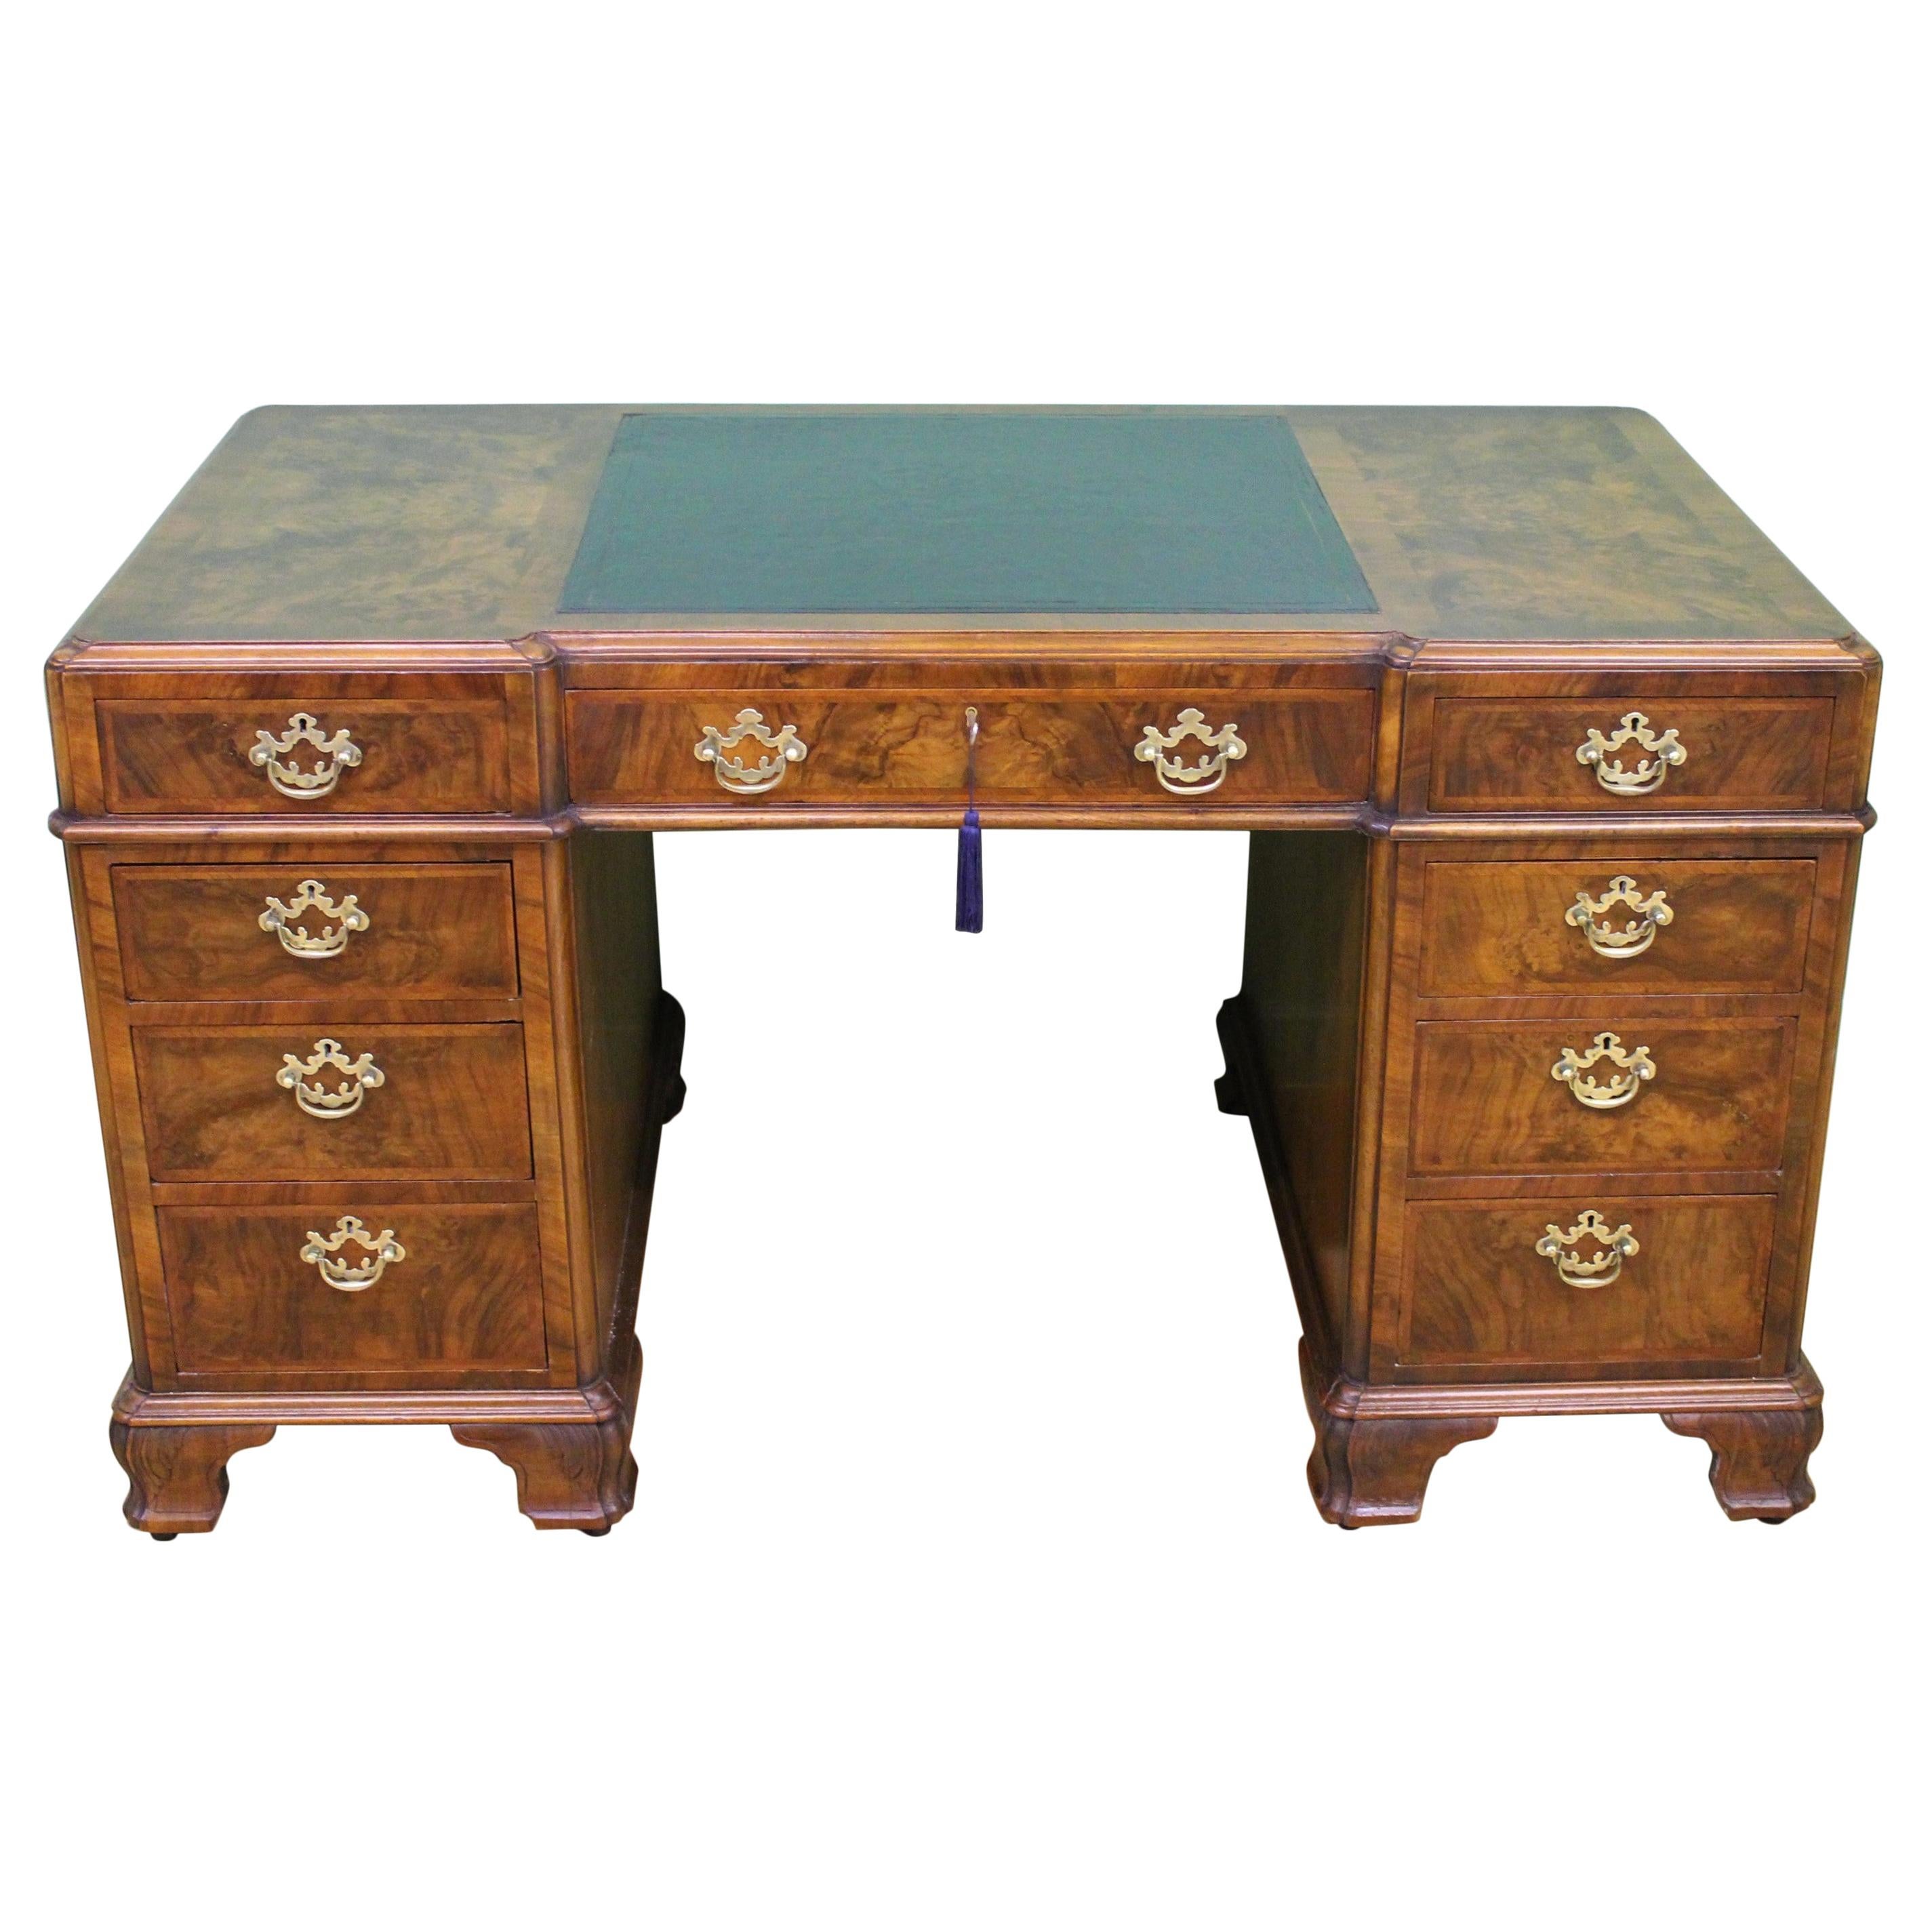 English Burr Walnut Pedestal Desk by Maple & Co.